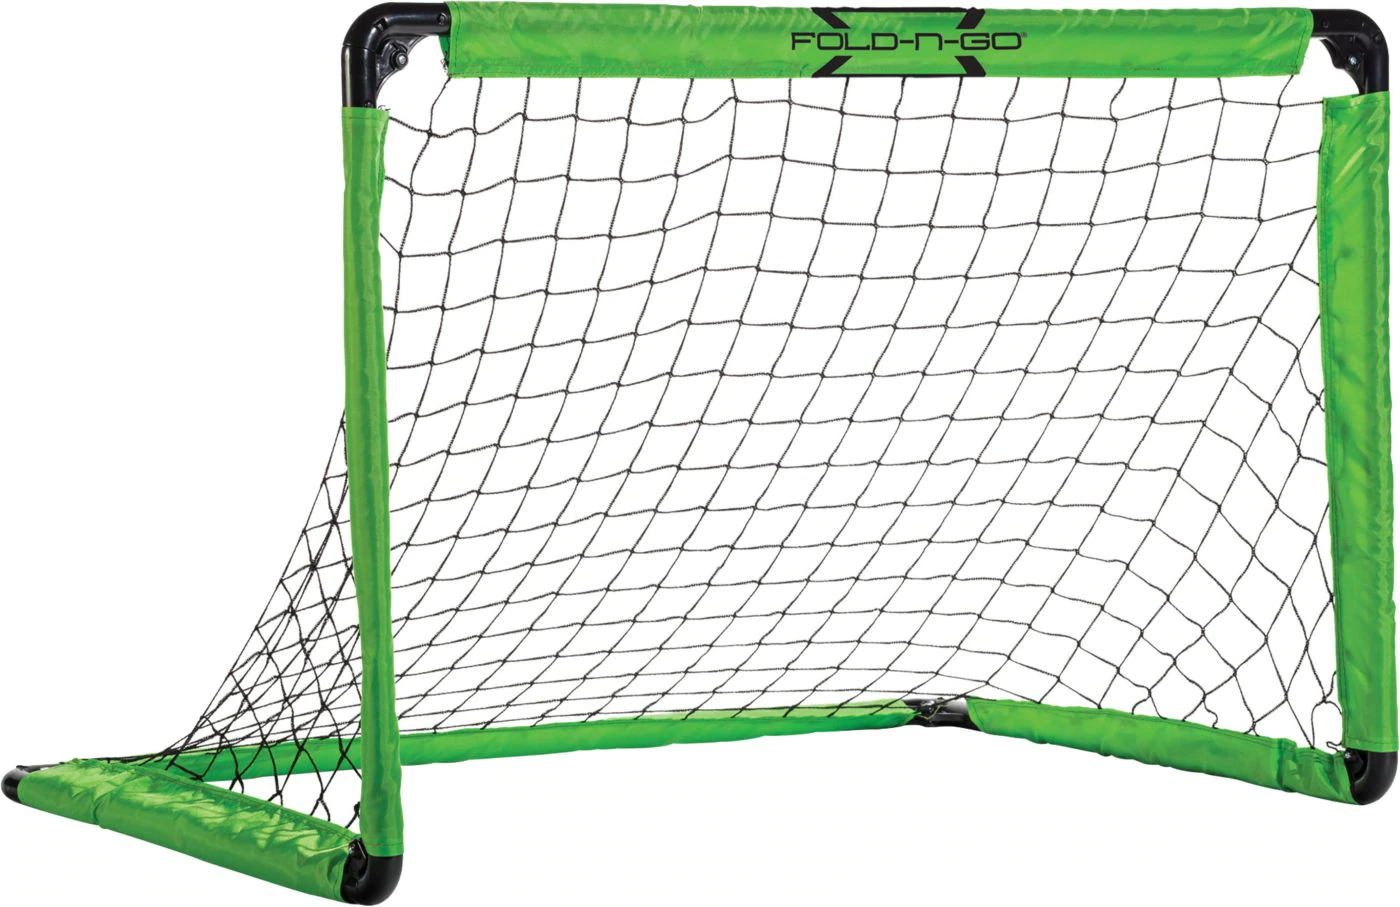 Fold-n-Go Steel Soccer Goal - 36 inch.